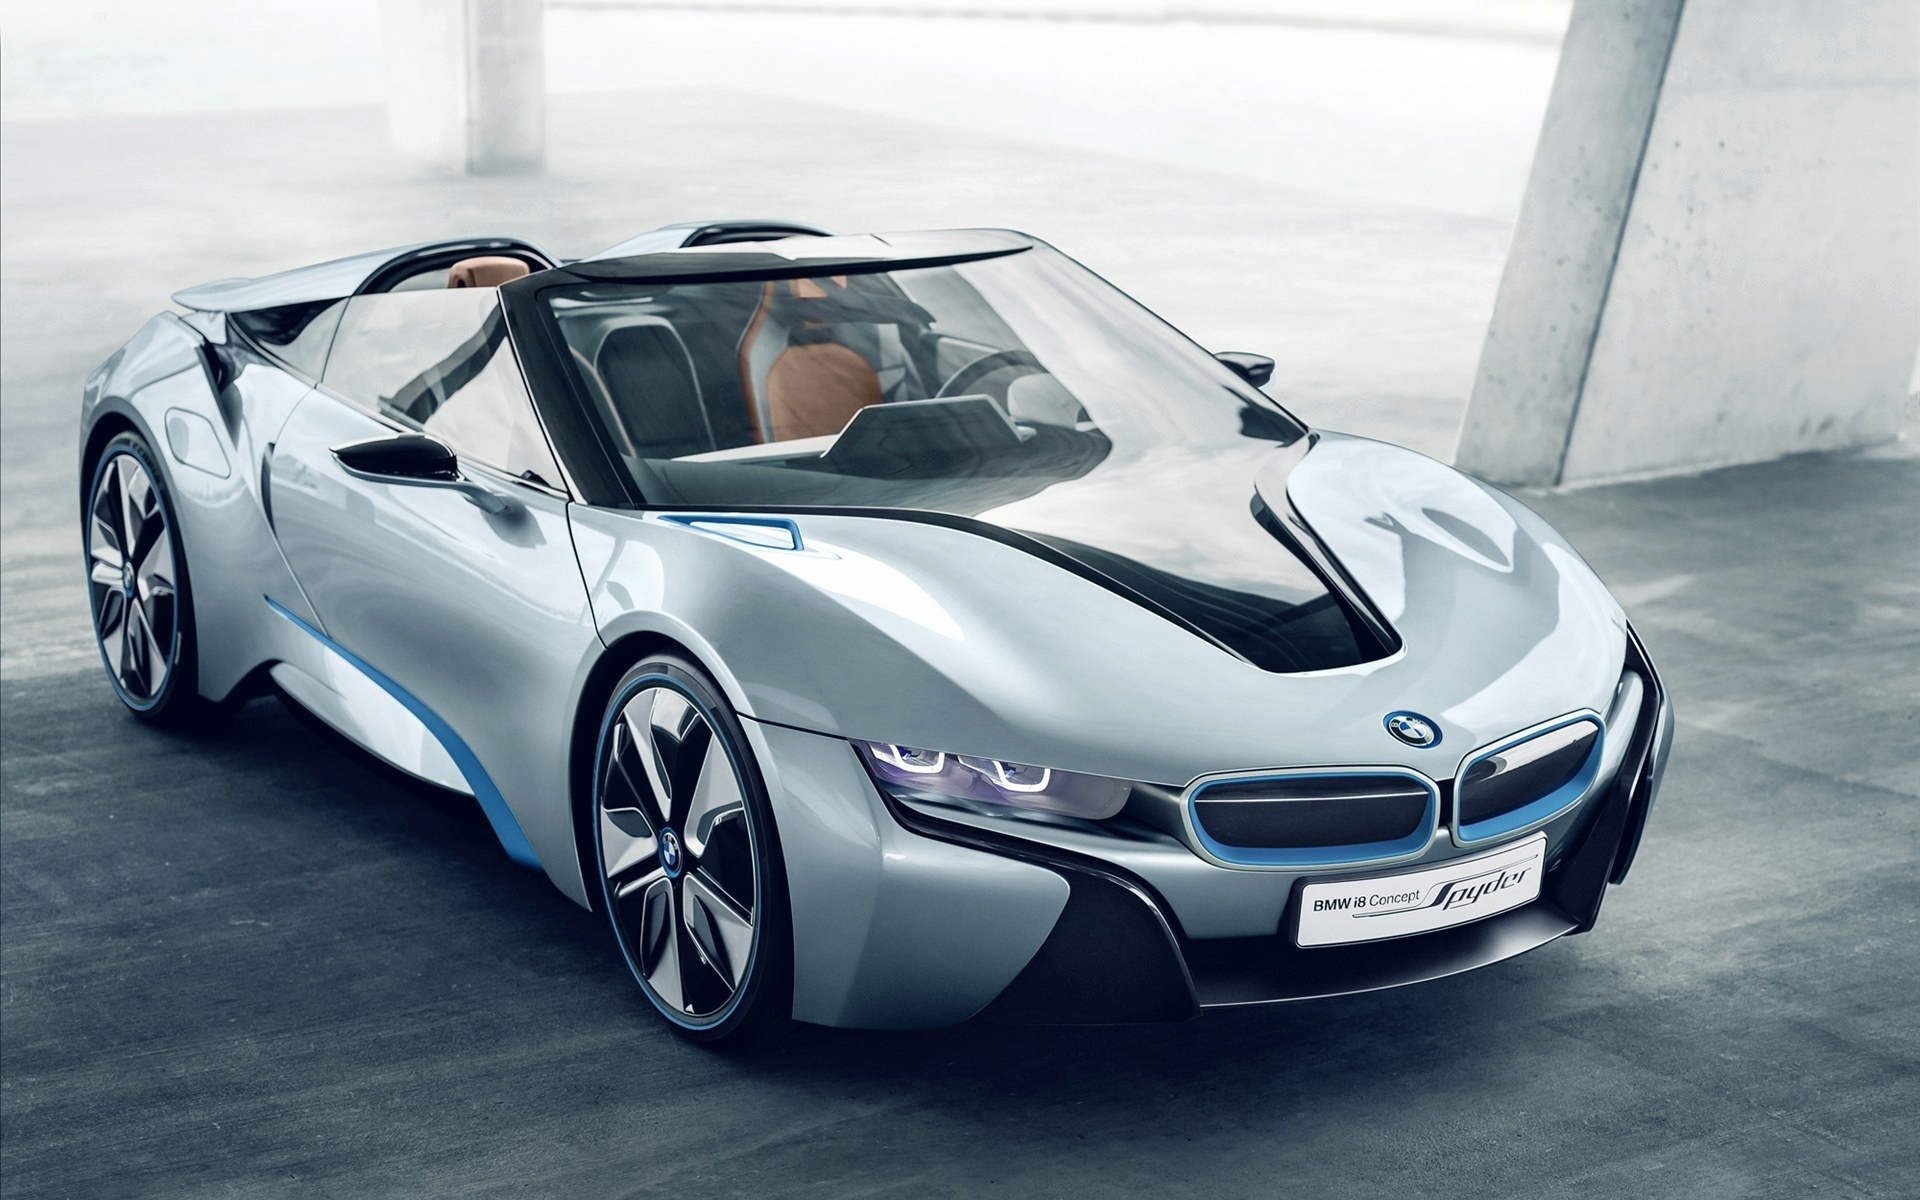 BMW transport, Automotive elegance, Sleek profile, On the move, Free download, 1920x1200 HD Desktop